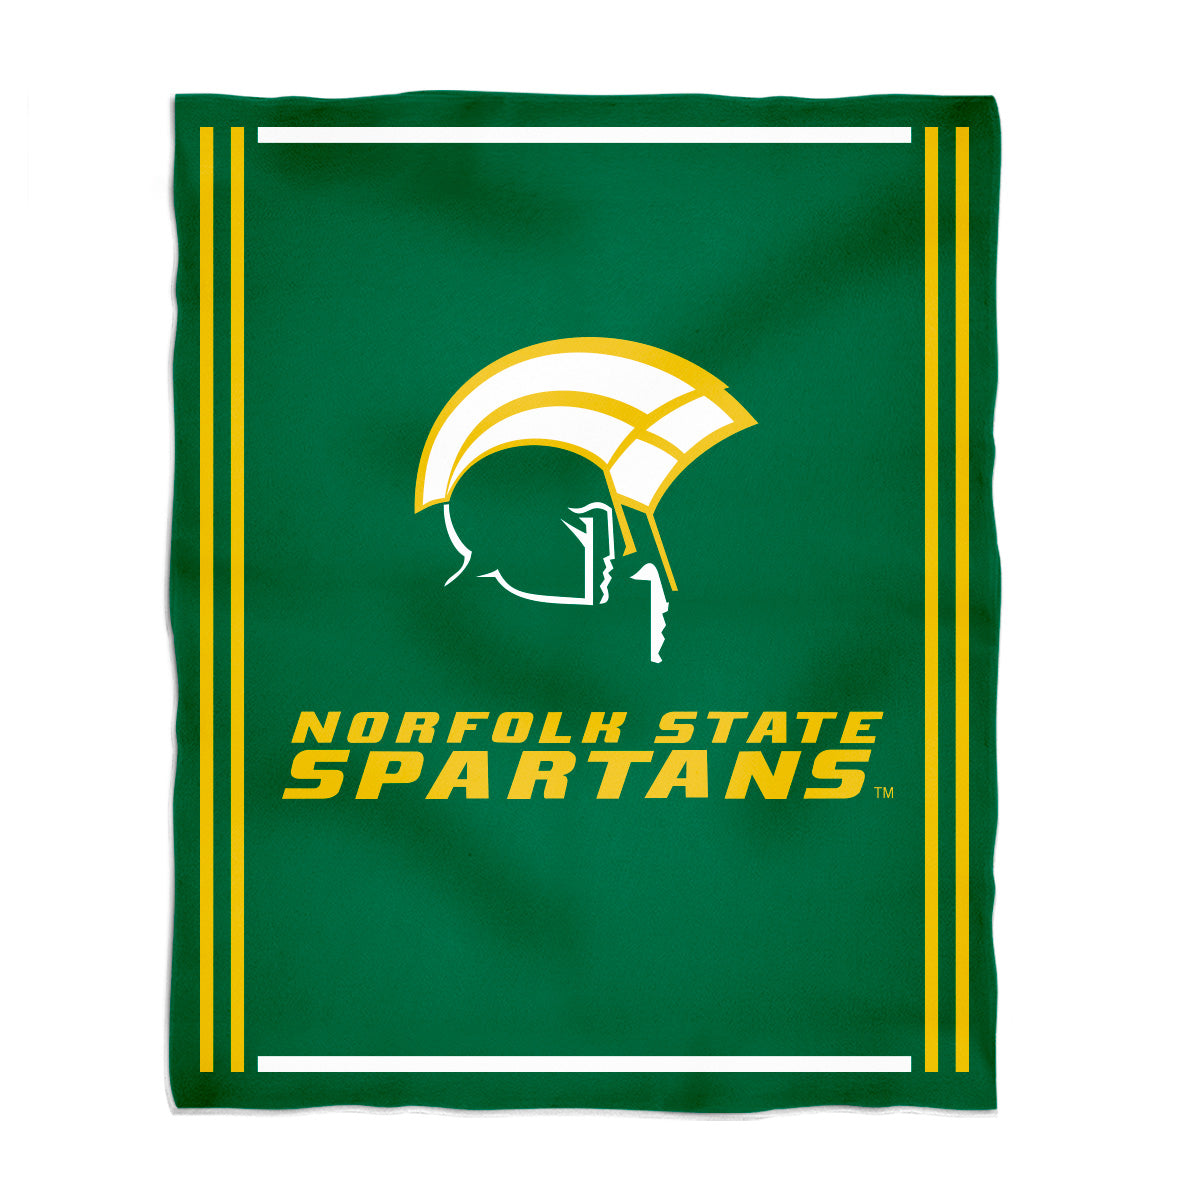 Norfolk State Spartans Kids Game Day Green Plush Soft Minky Blanket 36 x 48 Mascot